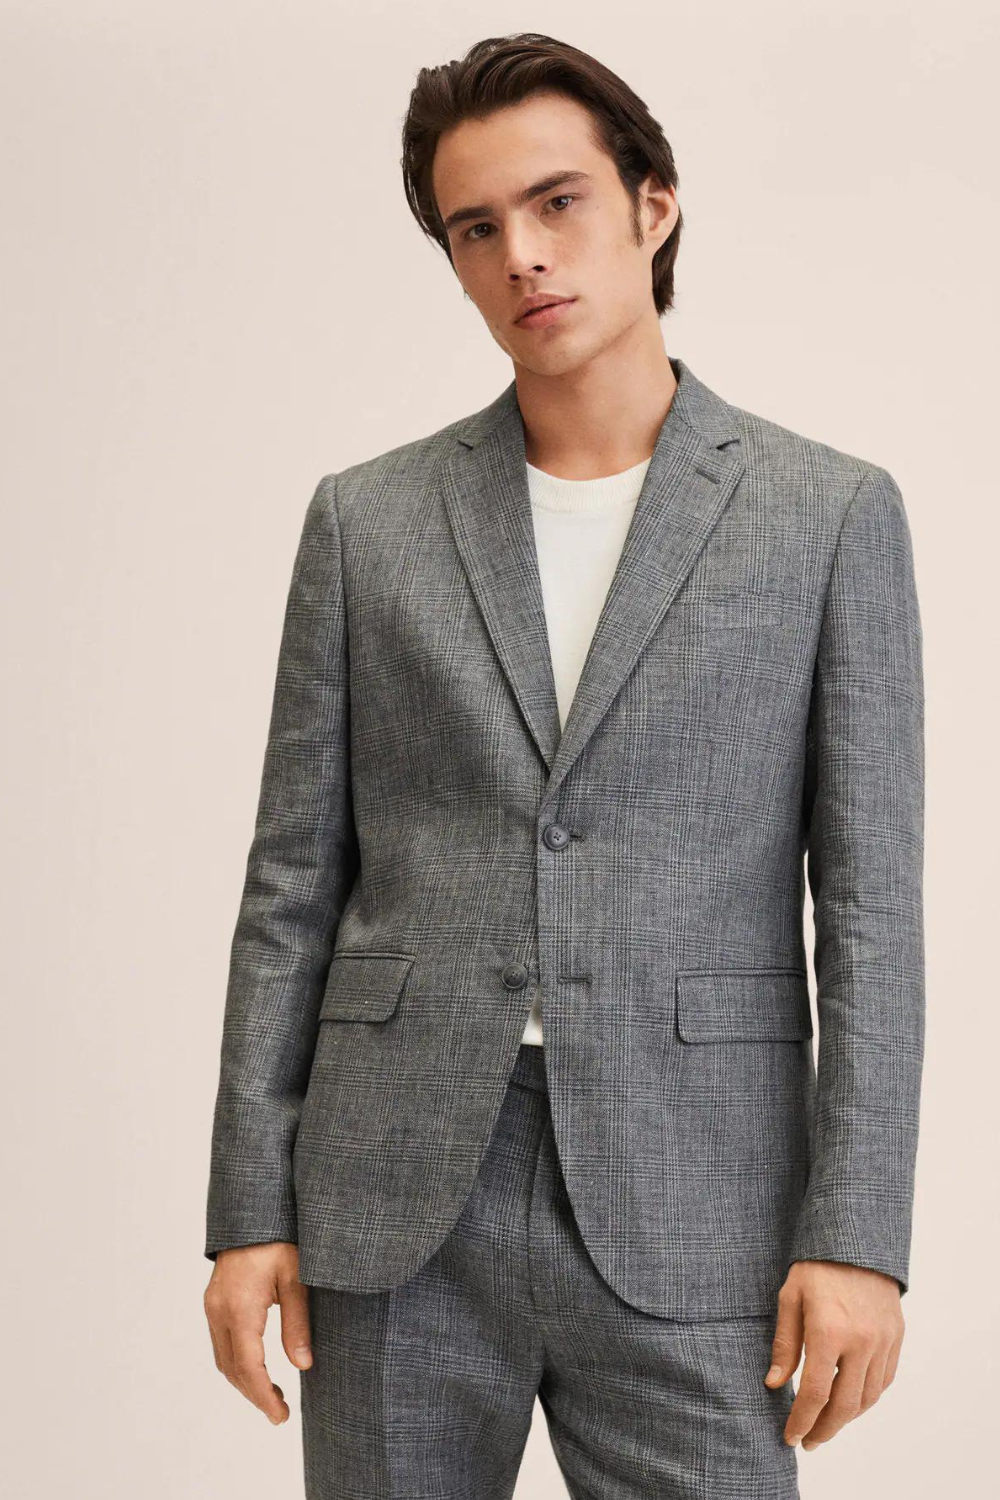 grey suit for men